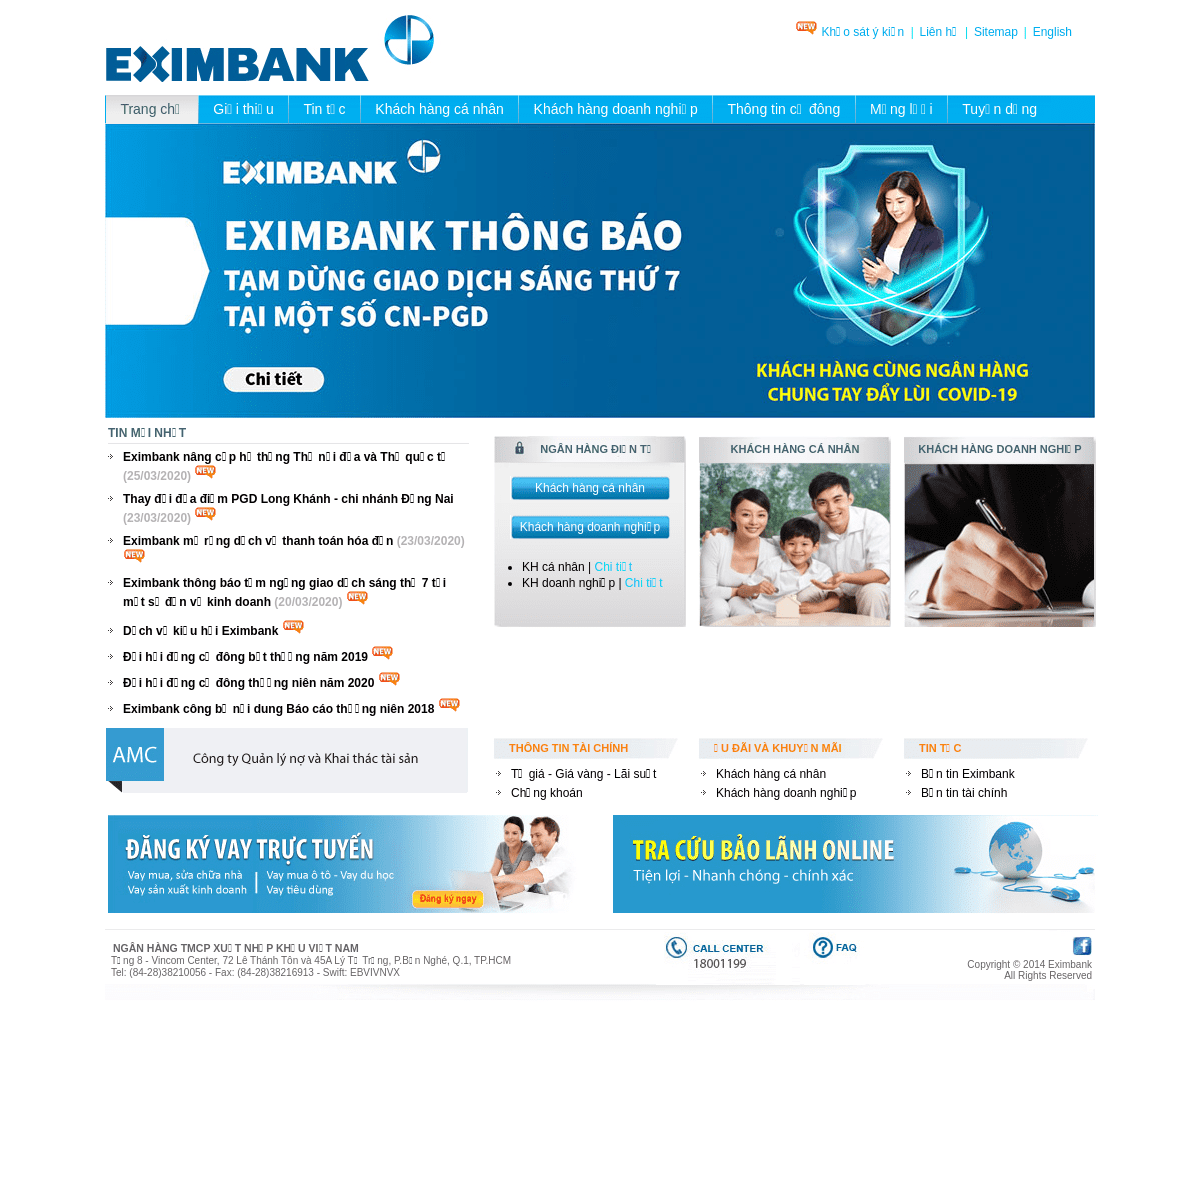 A complete backup of eximbank.com.vn